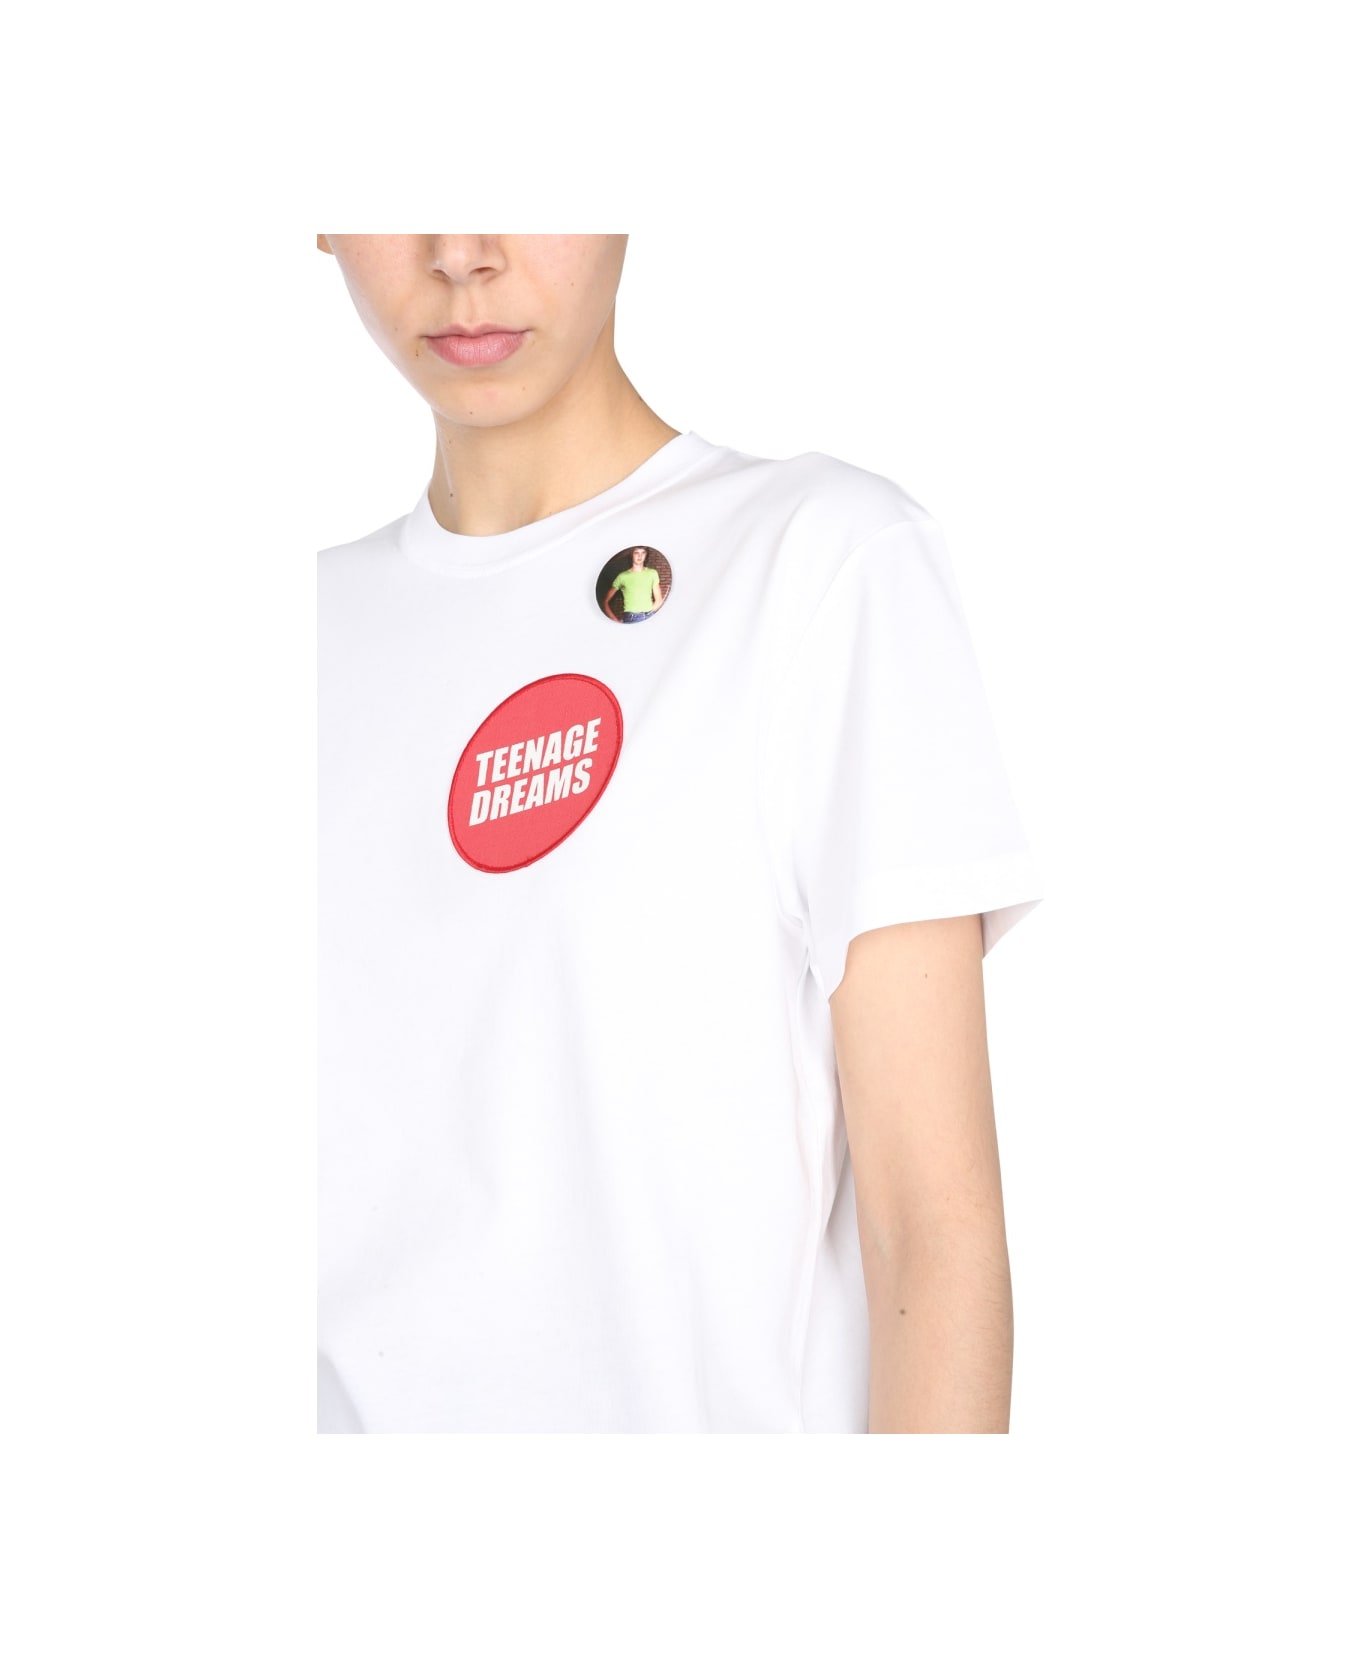 Raf Simons Crew Neck T-shirt - WHITE Tシャツ